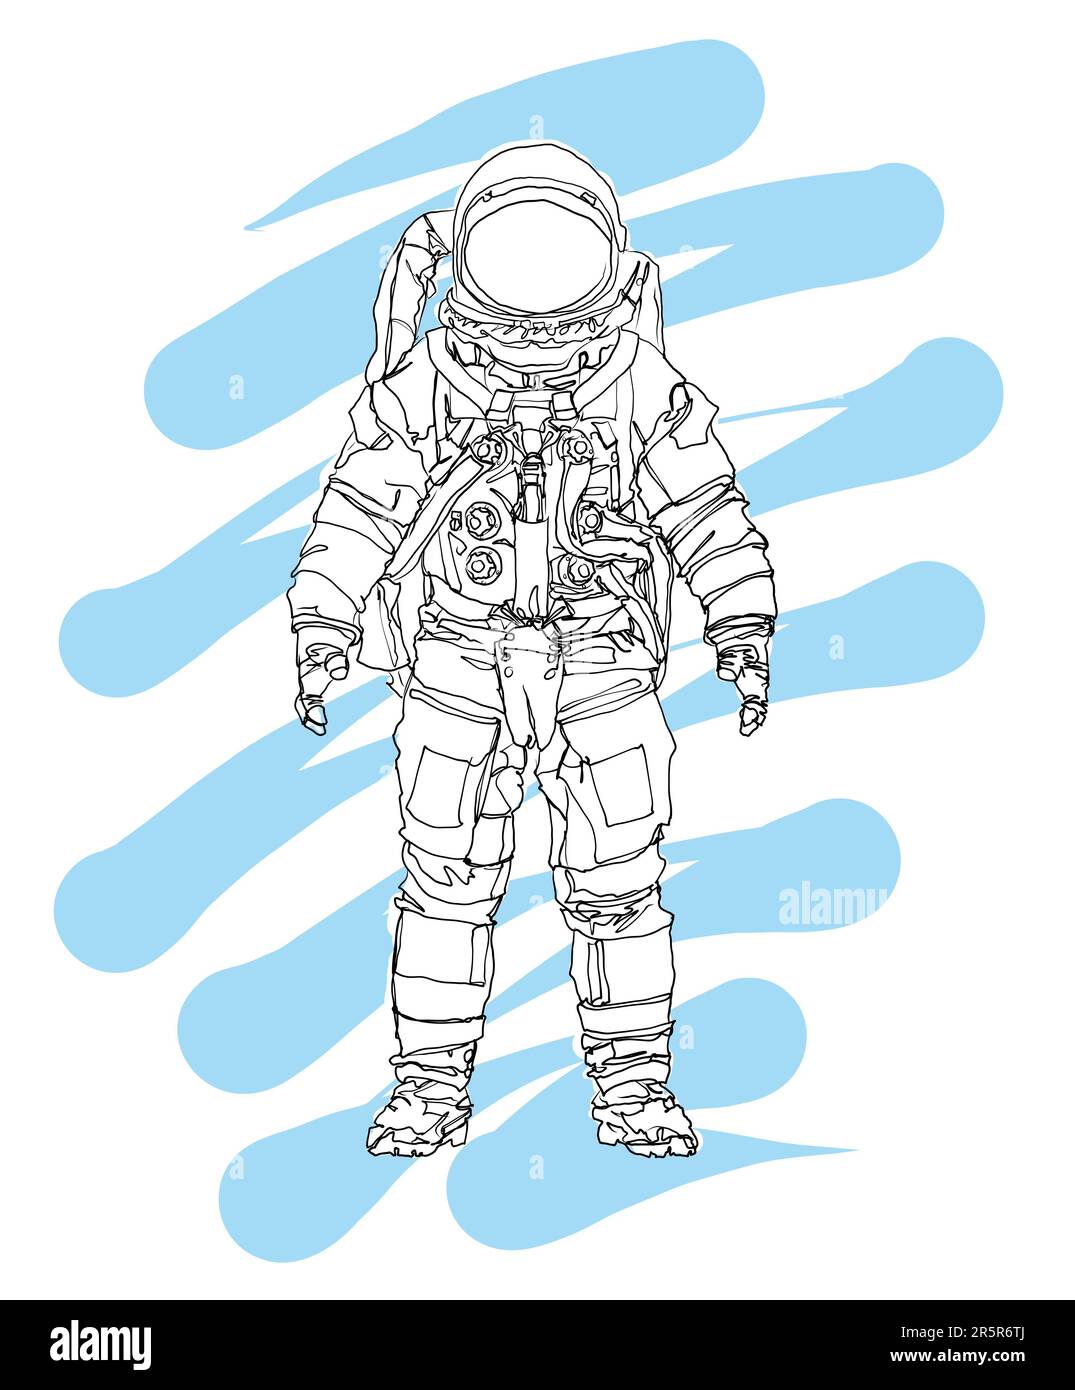 Astronaut Line Drawing Spaceman Hand Drawn Blue Splash Graphic Retro Illustration Overlay Layer Illustration Stock Photo